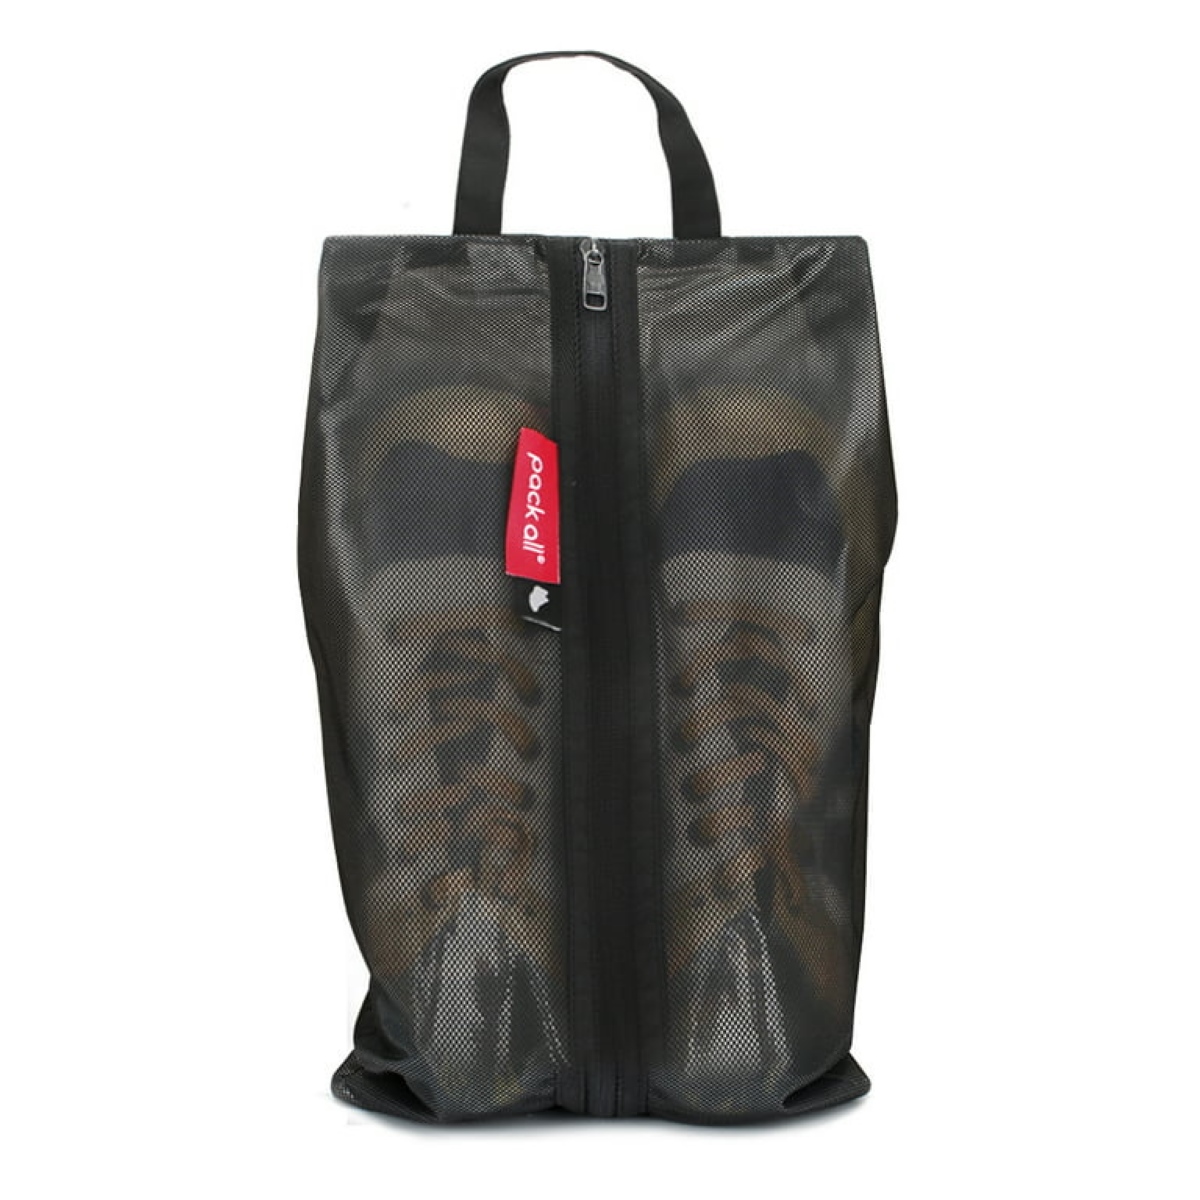 15 Amazing Shoe Bag With Zipper for 2023 | TouristSecrets